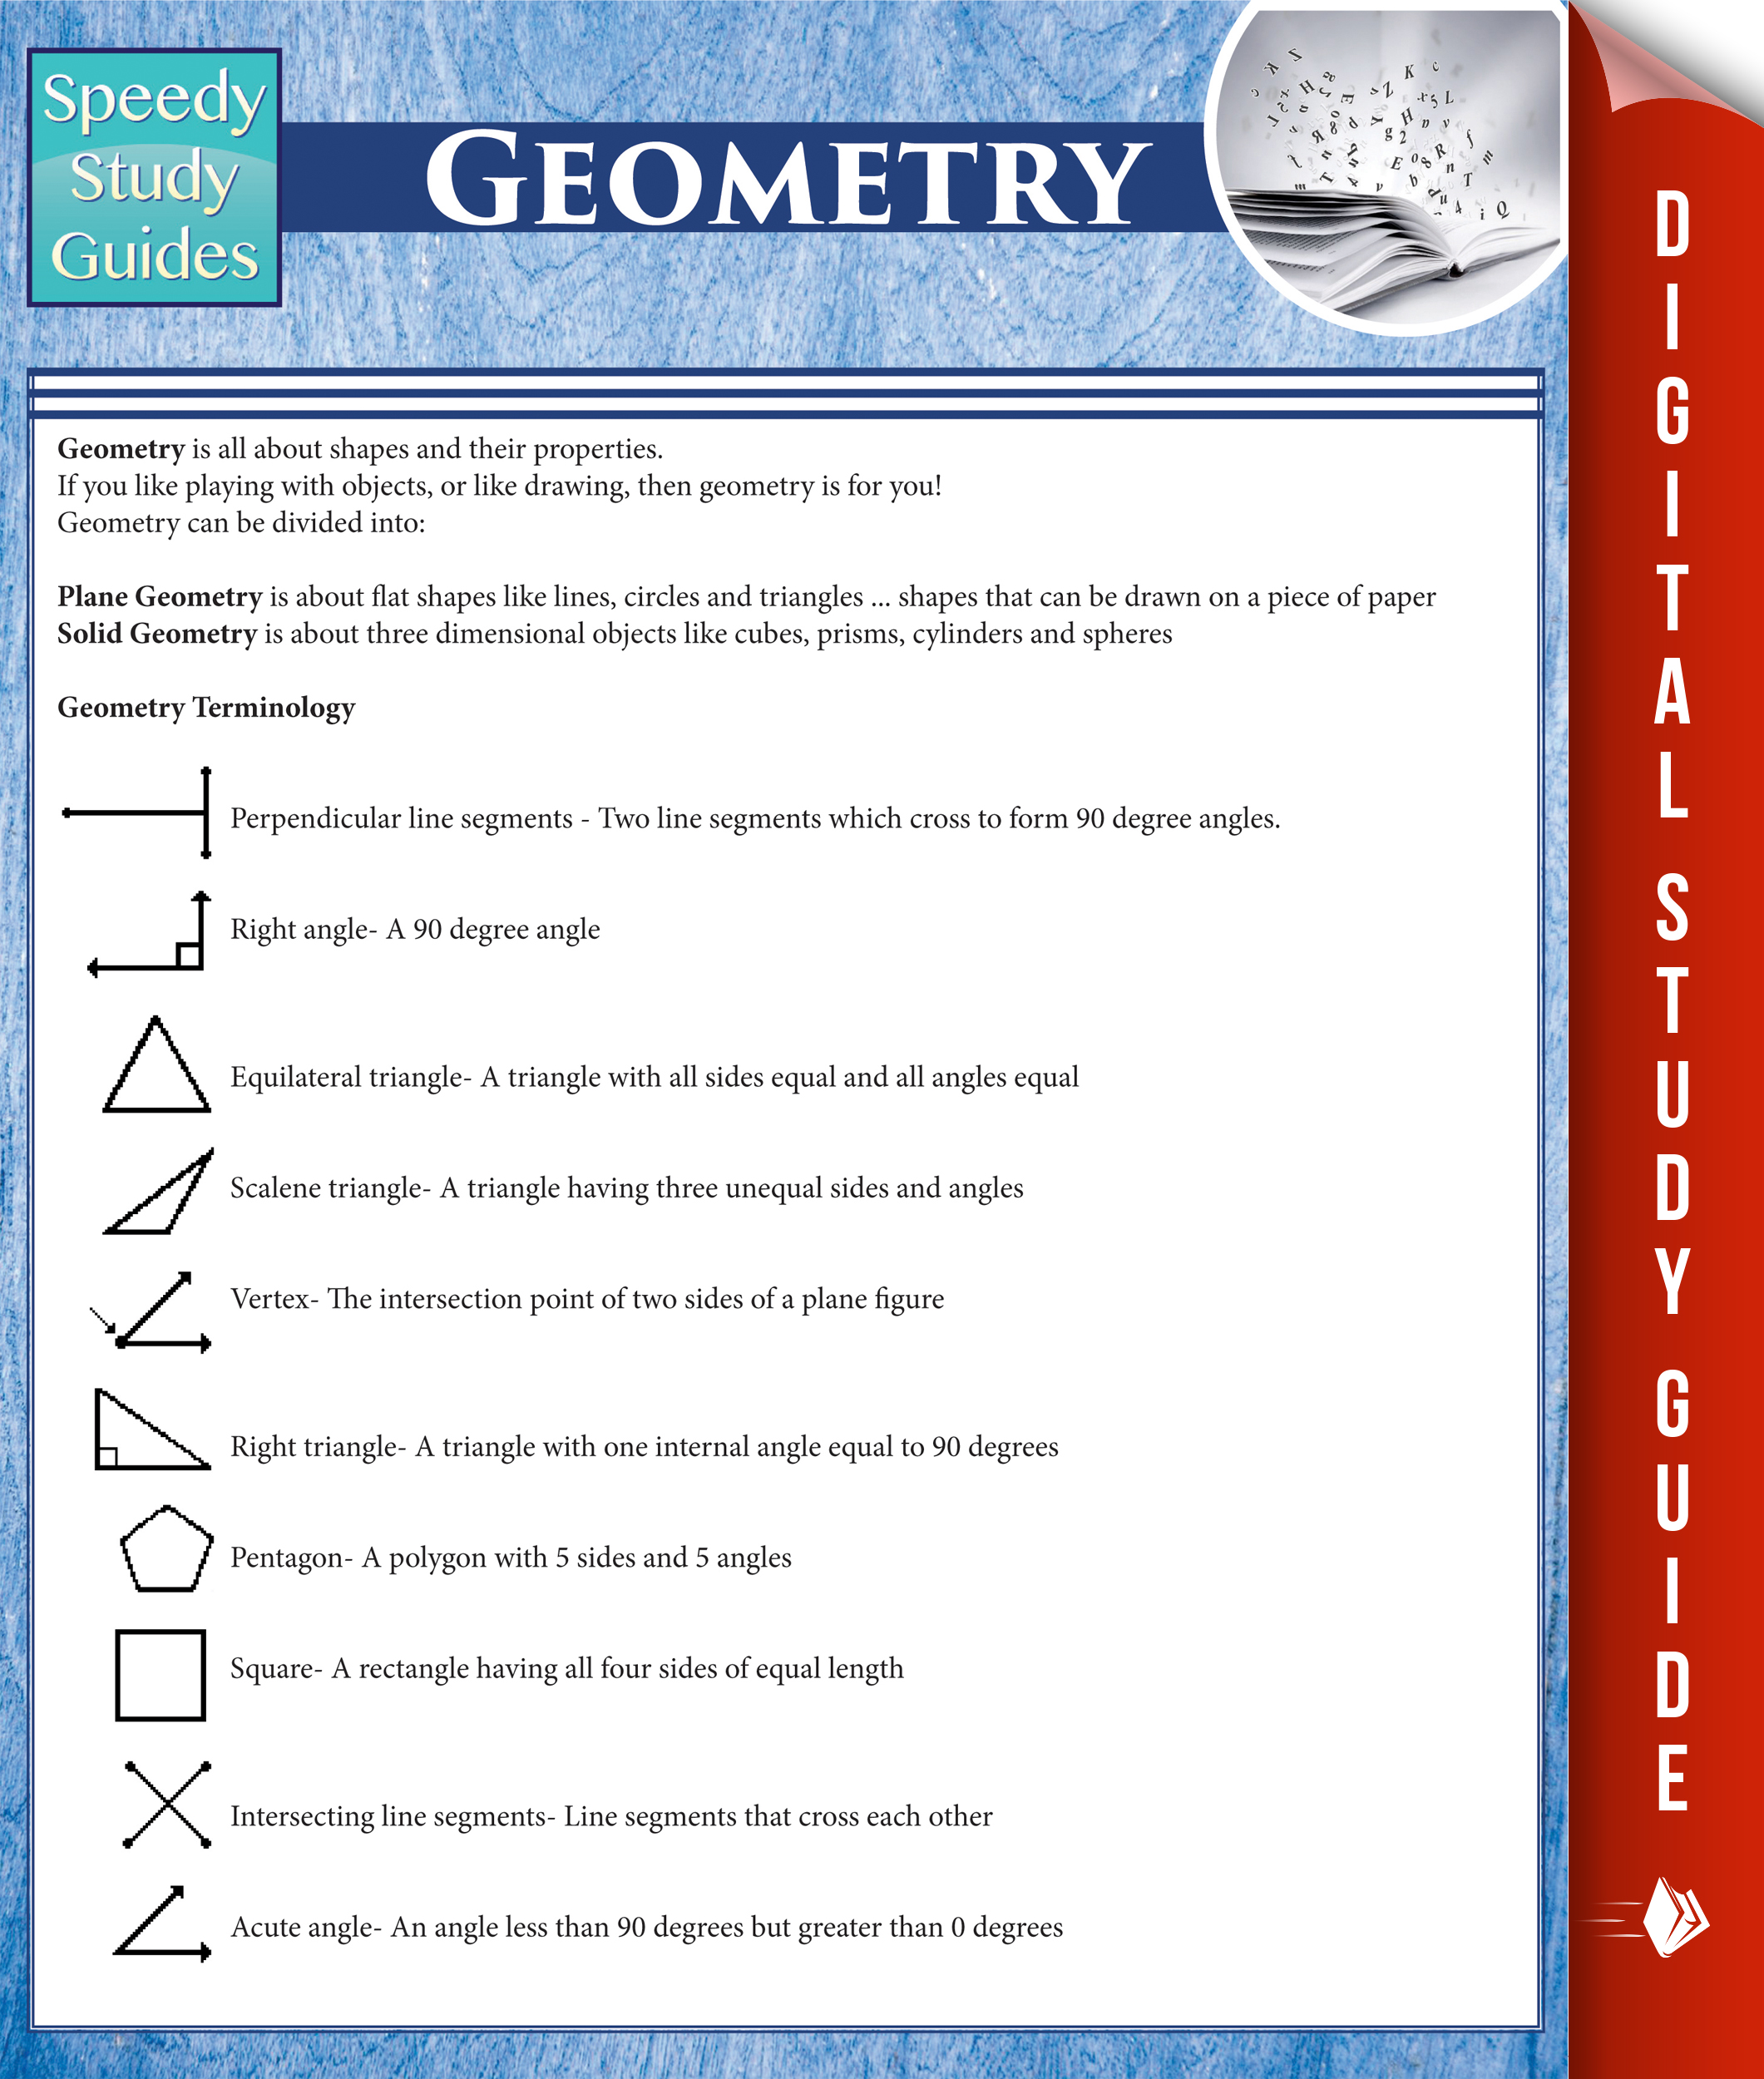 Geometry (Speedy Study Guides)